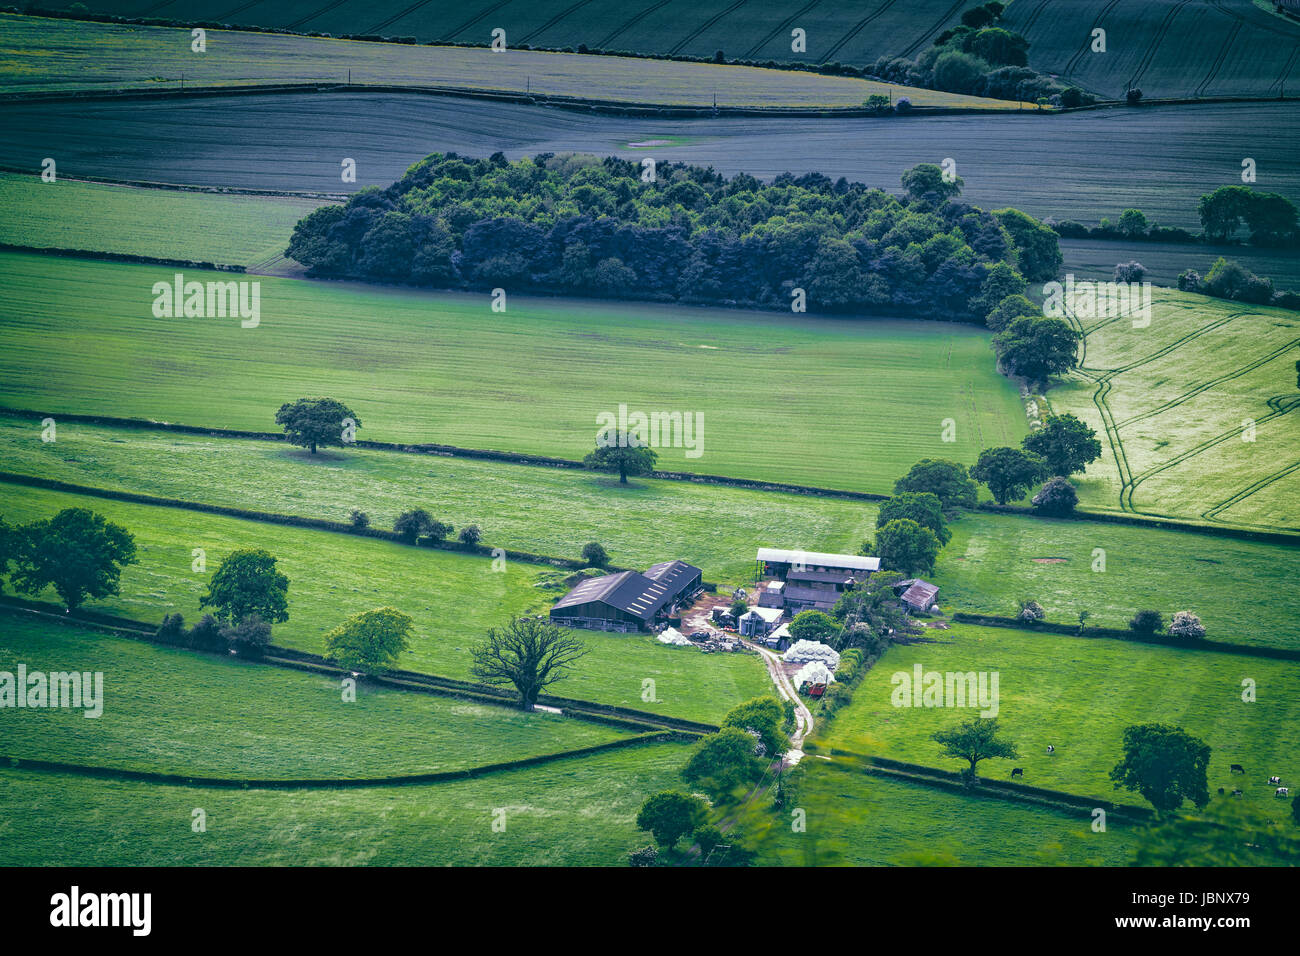 Granja británica entre campos verdes frescas, Aerail ver Foto de stock